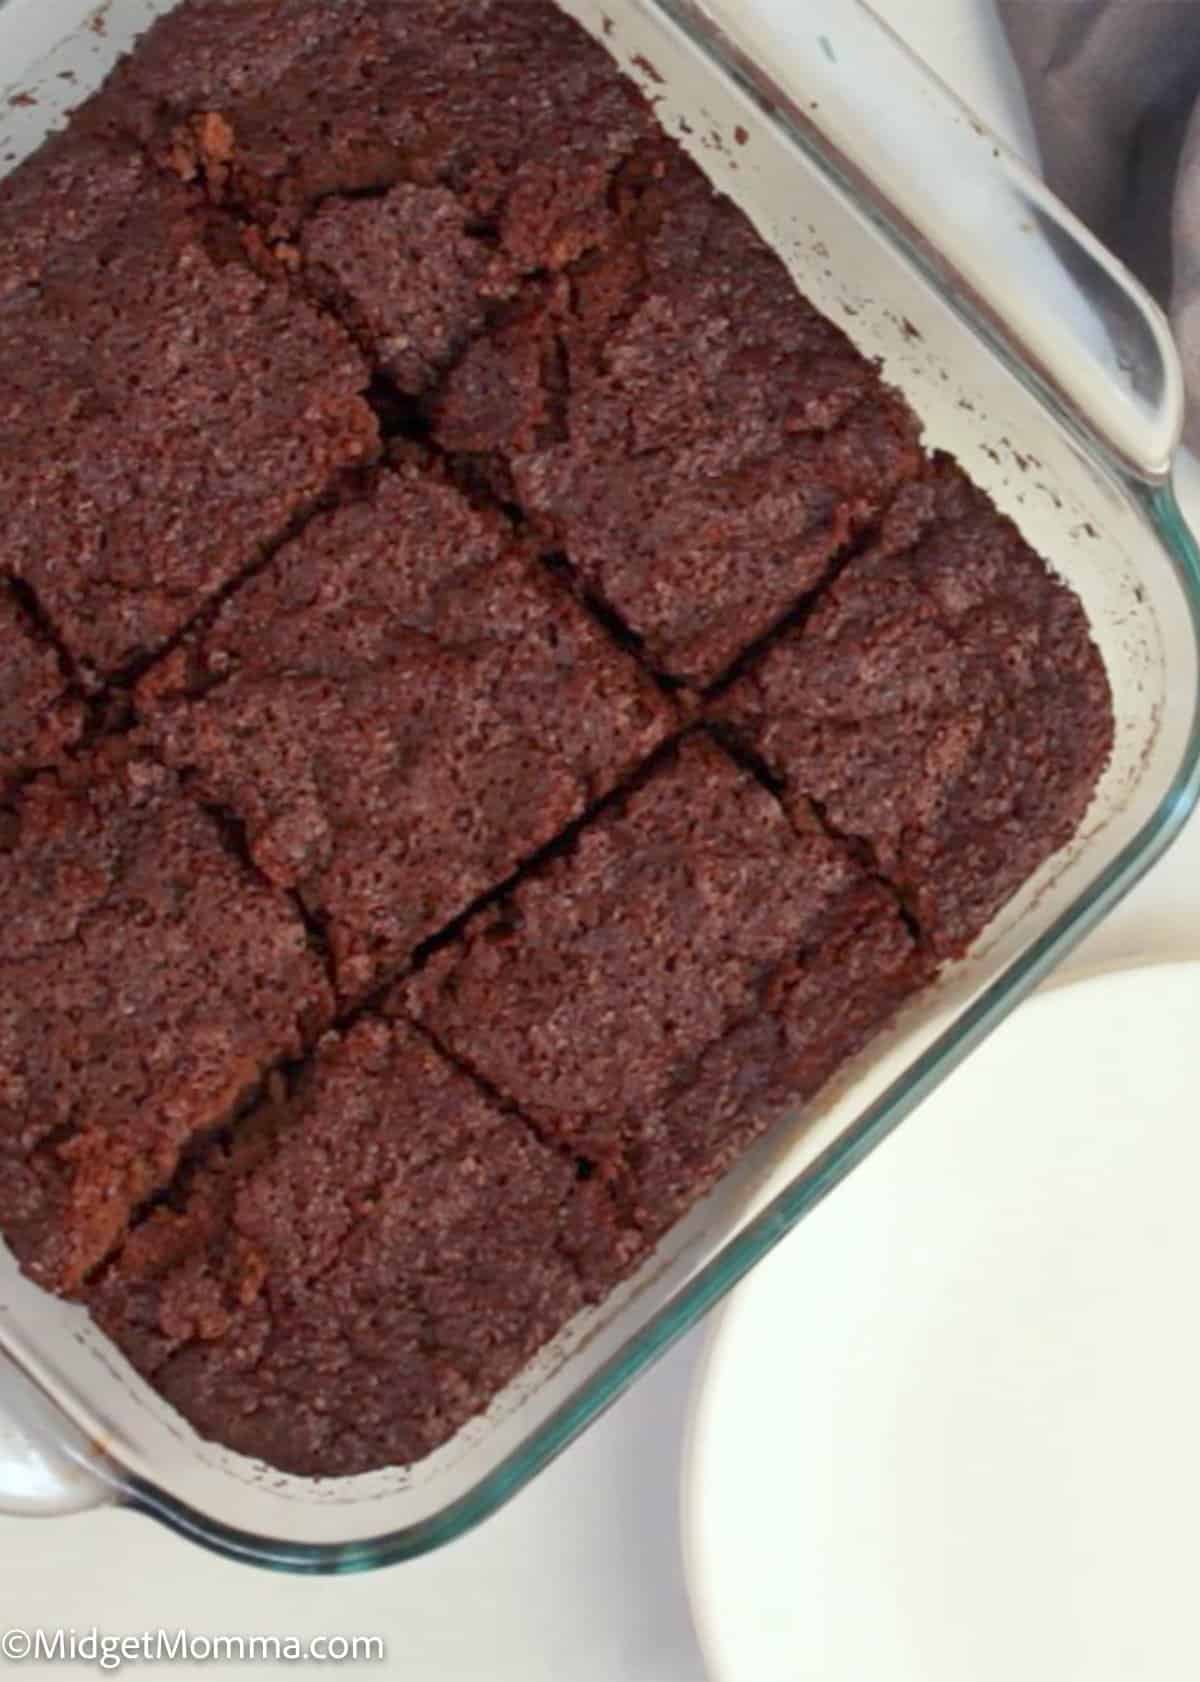 https://www.midgetmomma.com/wp-content/uploads/2020/04/Soda-Brownies-recipe-6.jpg